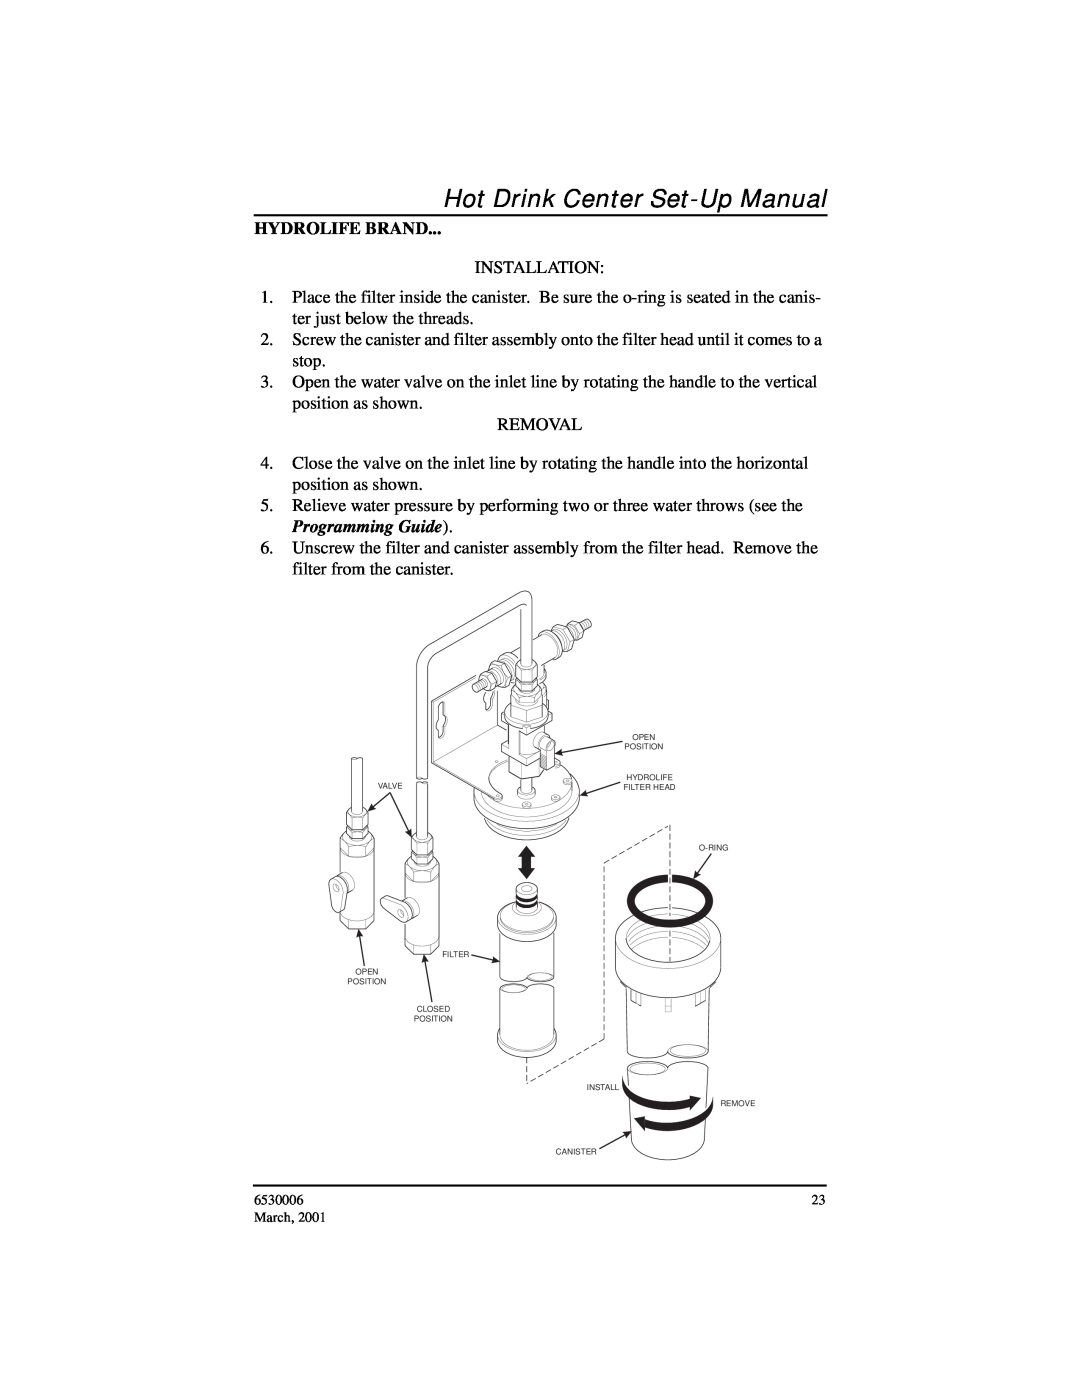 Crane Merchandising Systems 6530006 manual Hot Drink Center Set-Up Manual, Hydrolife Brand 